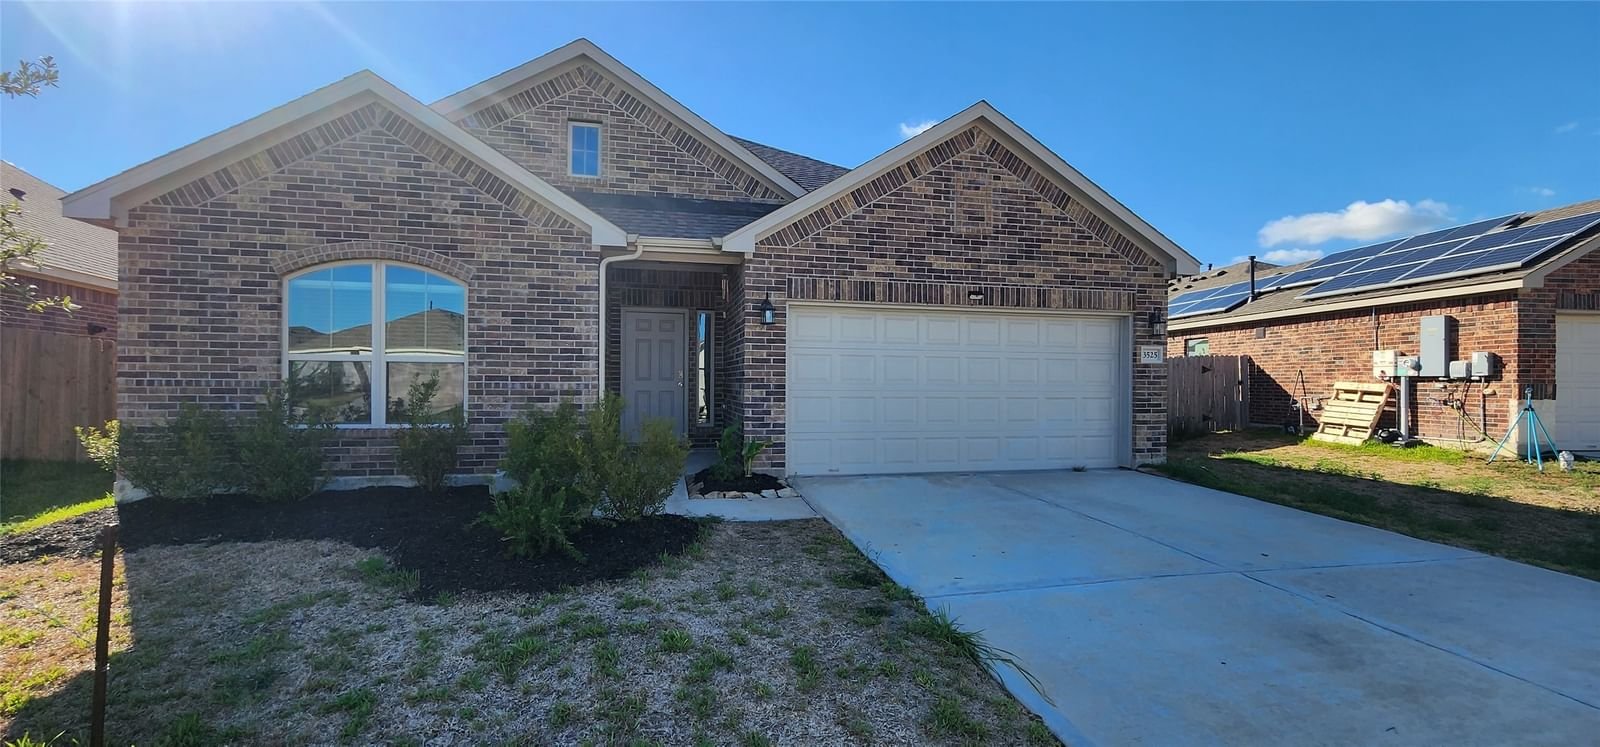 Real estate property located at 3525 Voyager, Galveston, Marlow Lake Sec 3, Texas City, TX, US